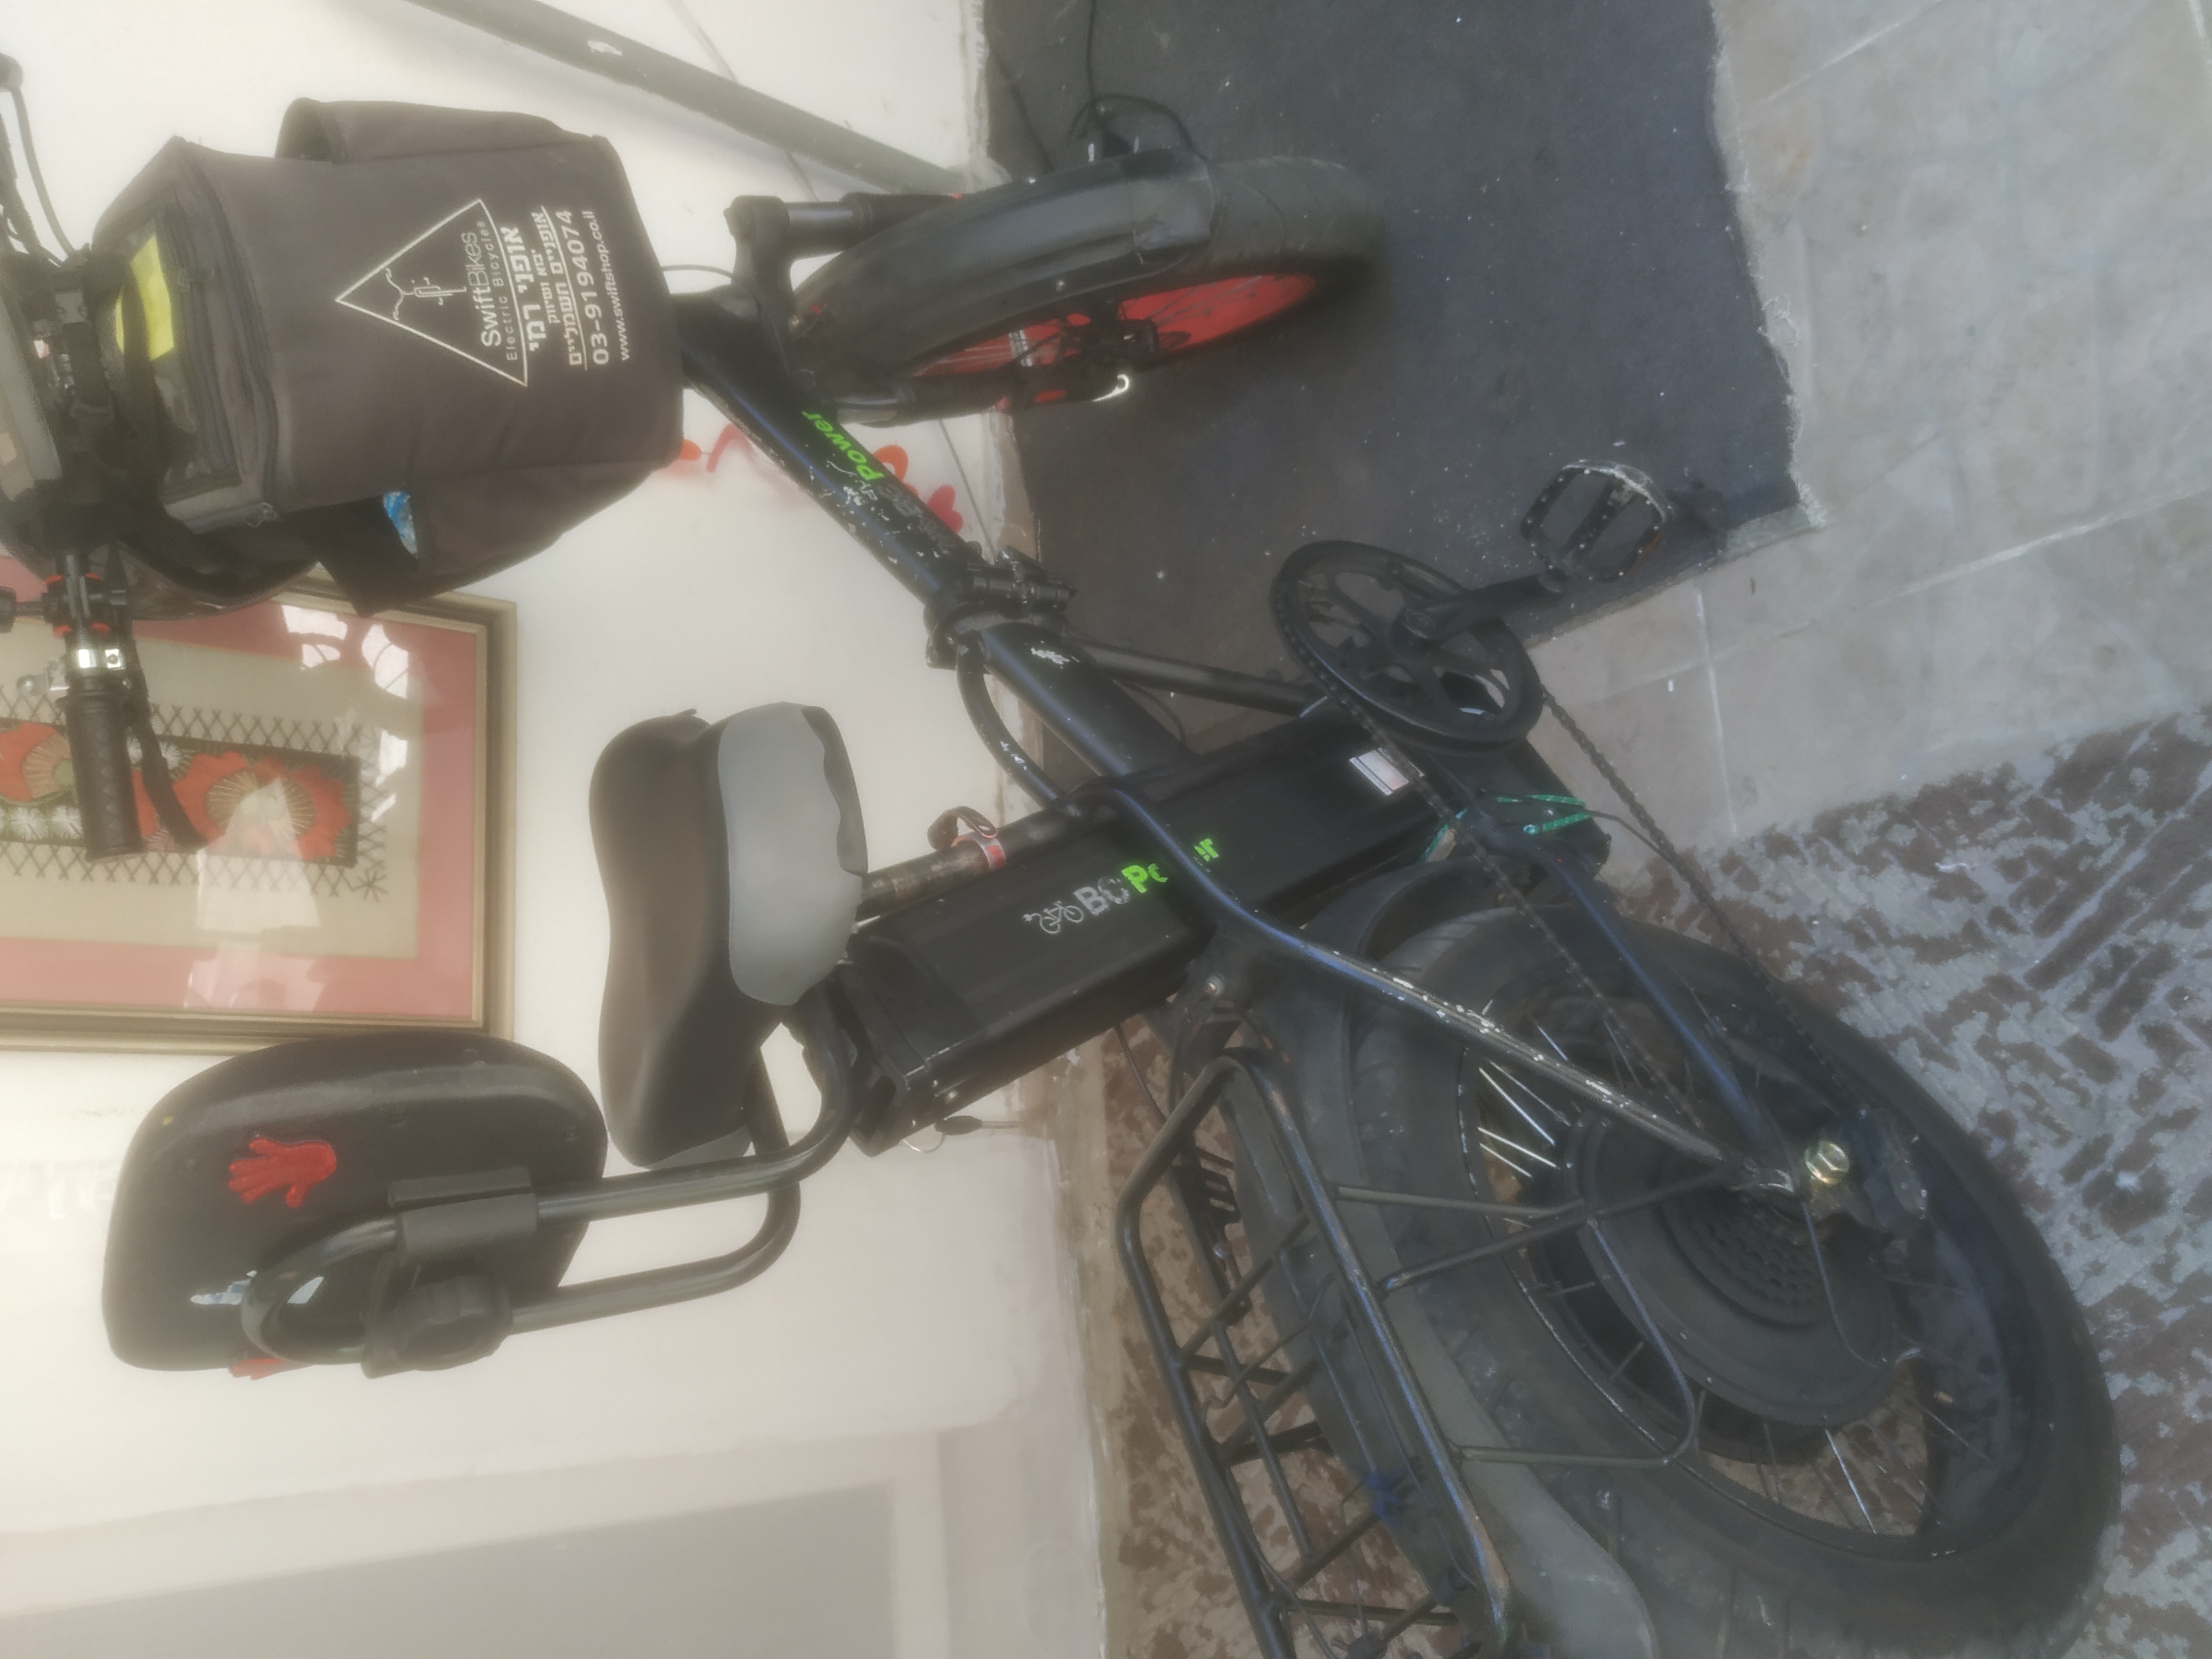 Improve Couscous Loneliness אופניים חשמליים למכירה בחיפה 4800 שח | אופניים - אופניים חשמליים | לוח יד  שניה הומלס